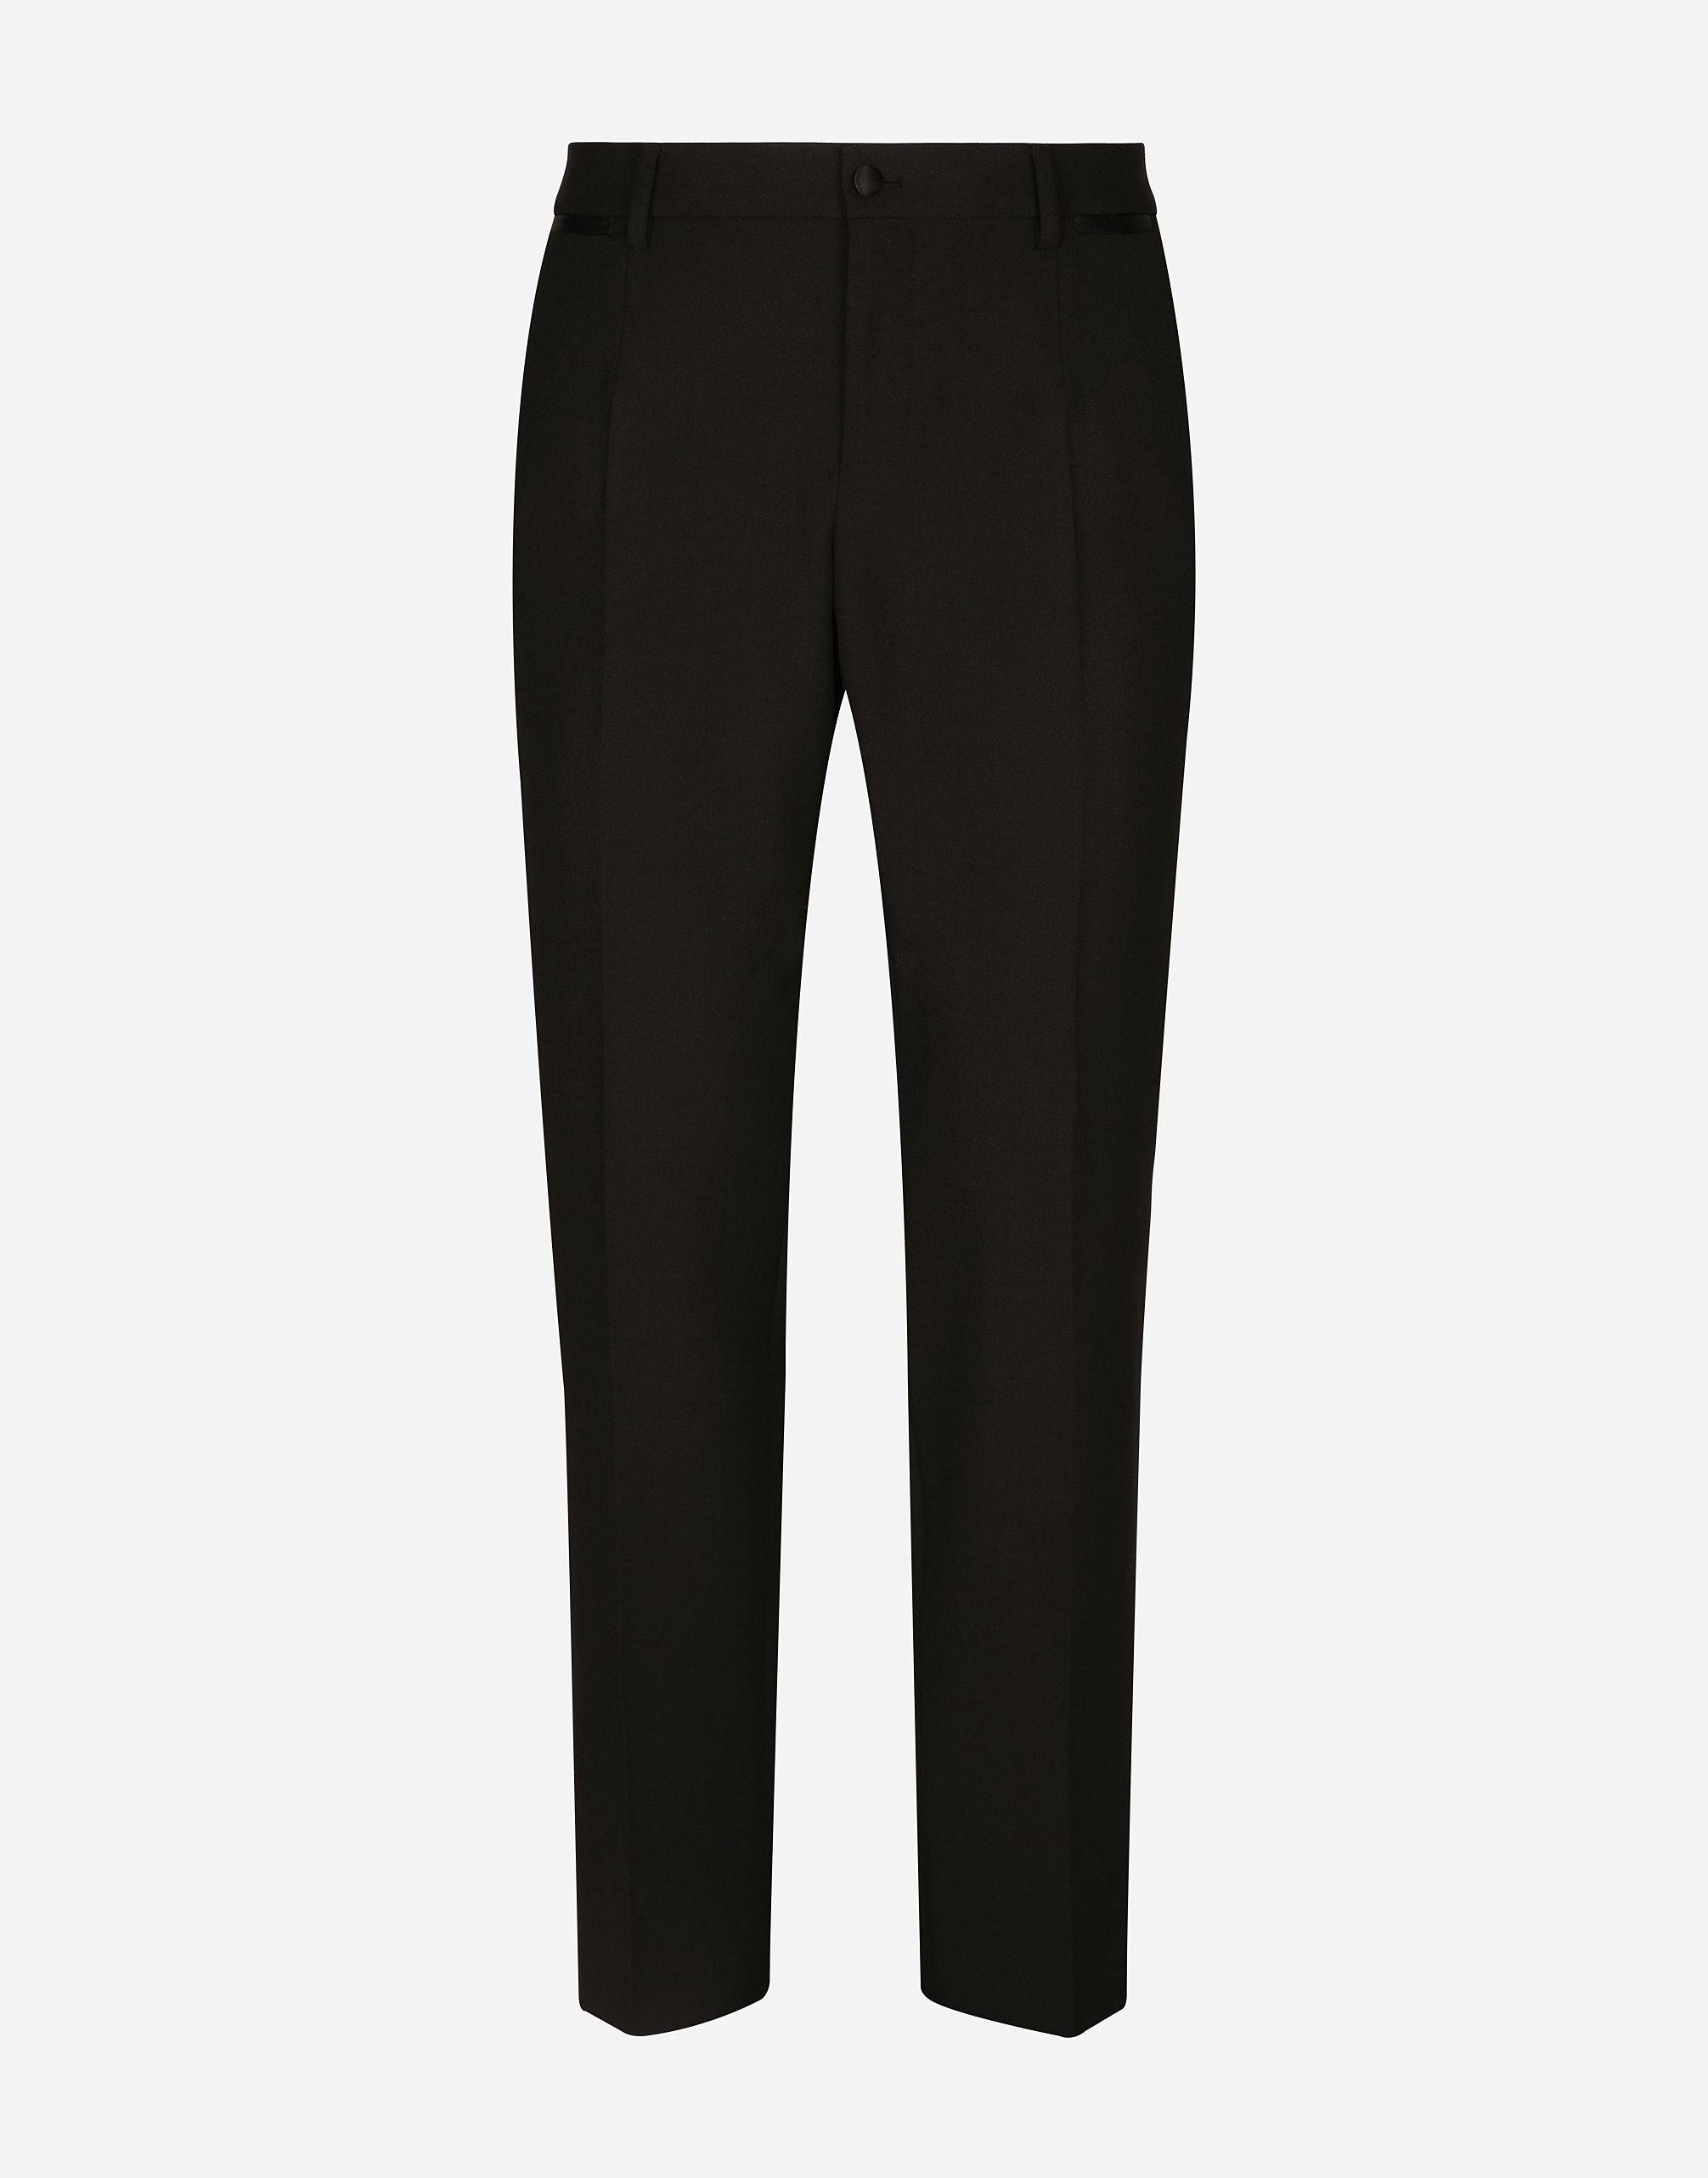 Dolce & Gabbana Tailored Stretch Wool Tuxedo Pants In Black